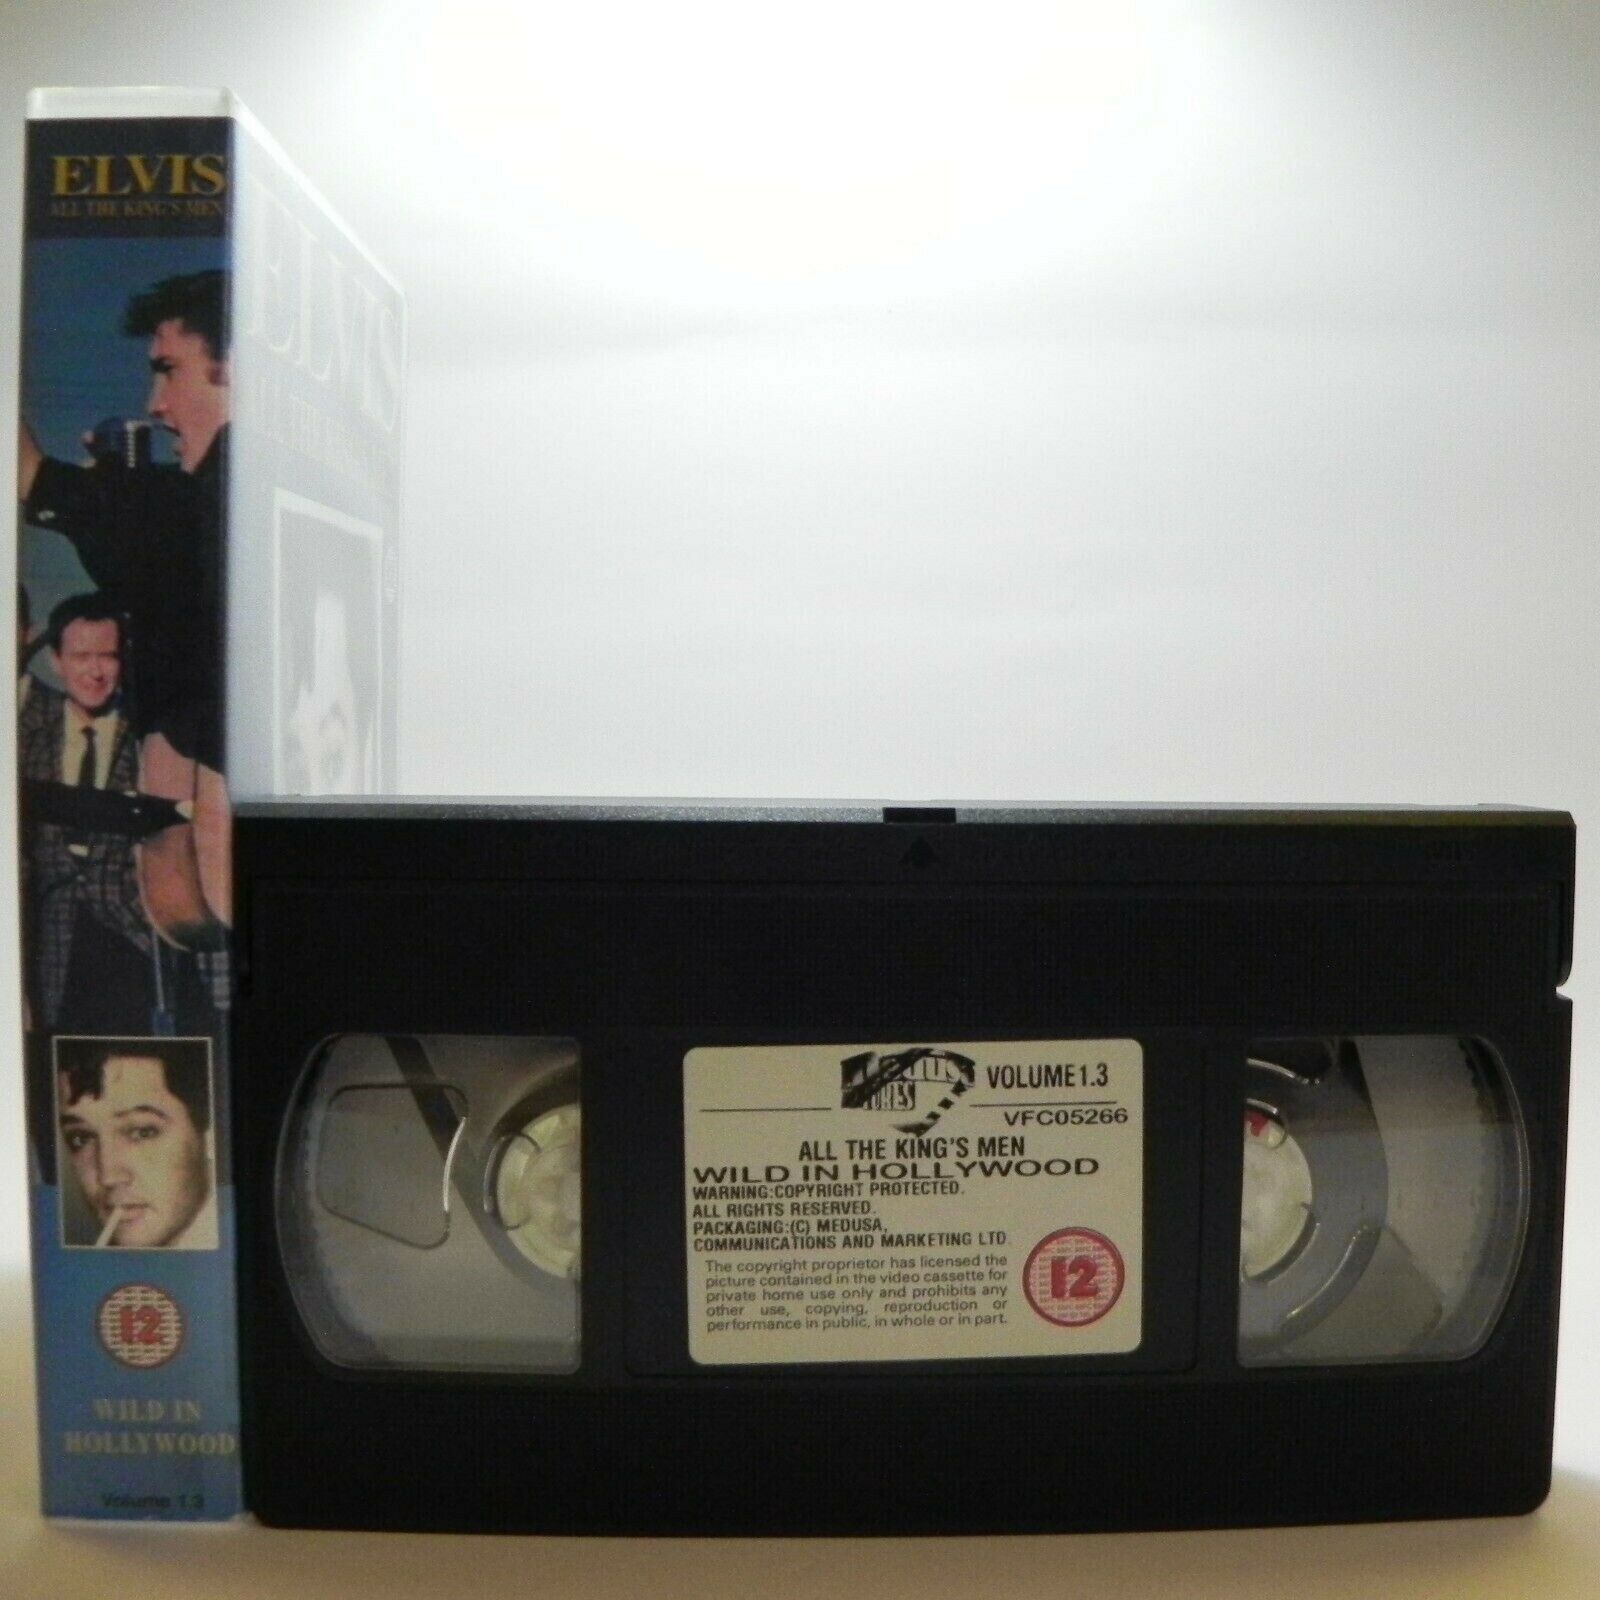 Elvis: All The King's Men - The Inside Story - The Memphis Mafia - Pal VHS-